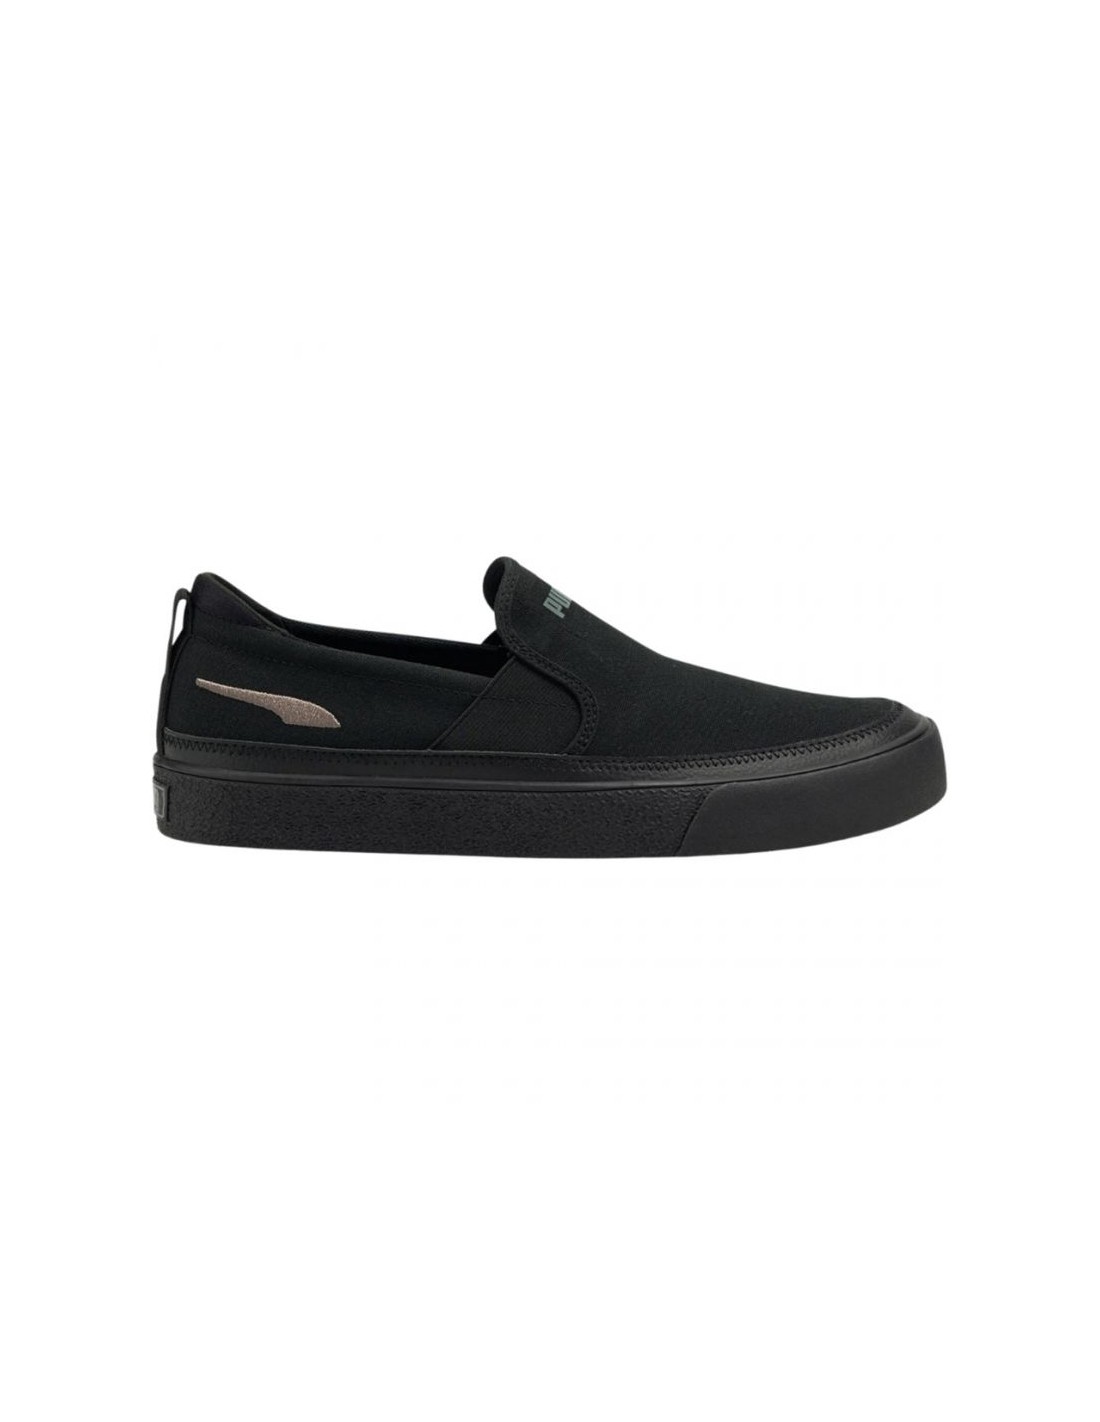 PUMA Bari Slip-On Comfort Women's Shoes in Black/Flat Dark Grey